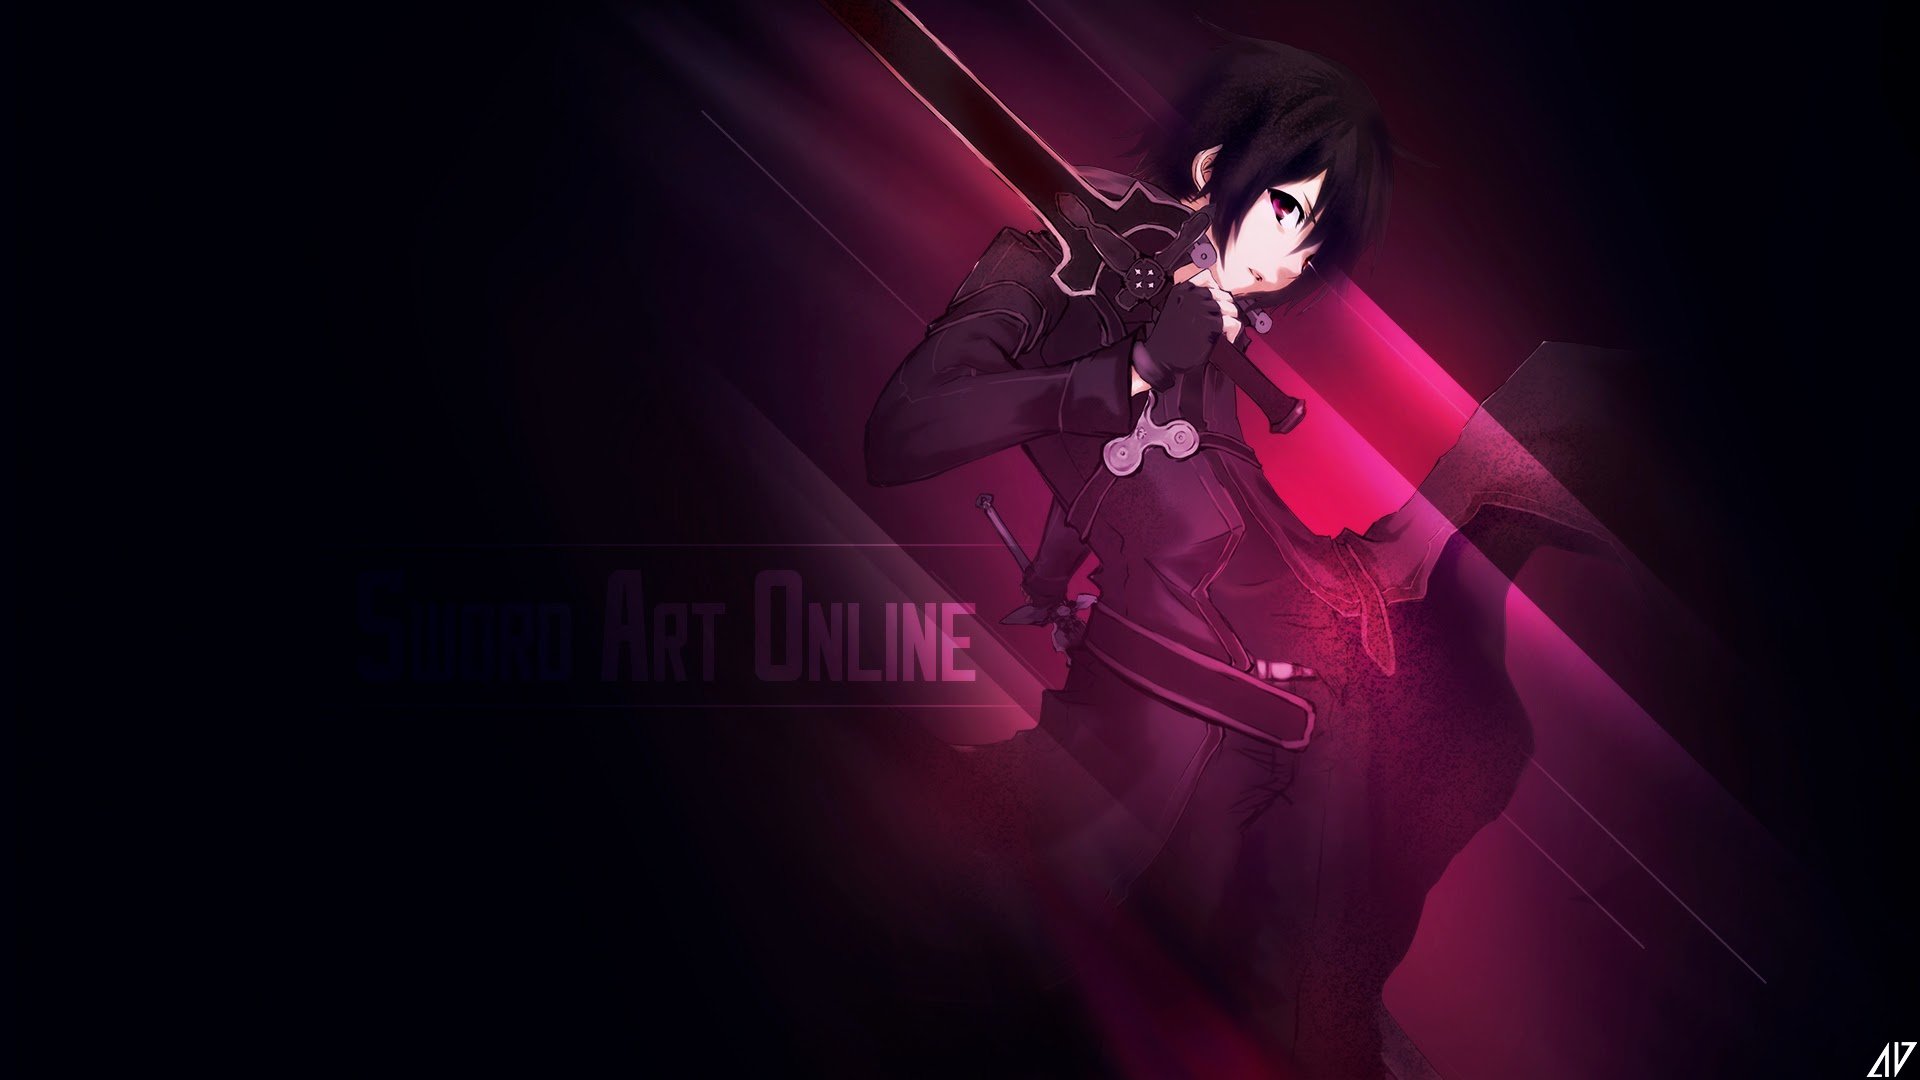 Free Download Kirito Sword Art Online Arc Anime Hd Wallpaper Image